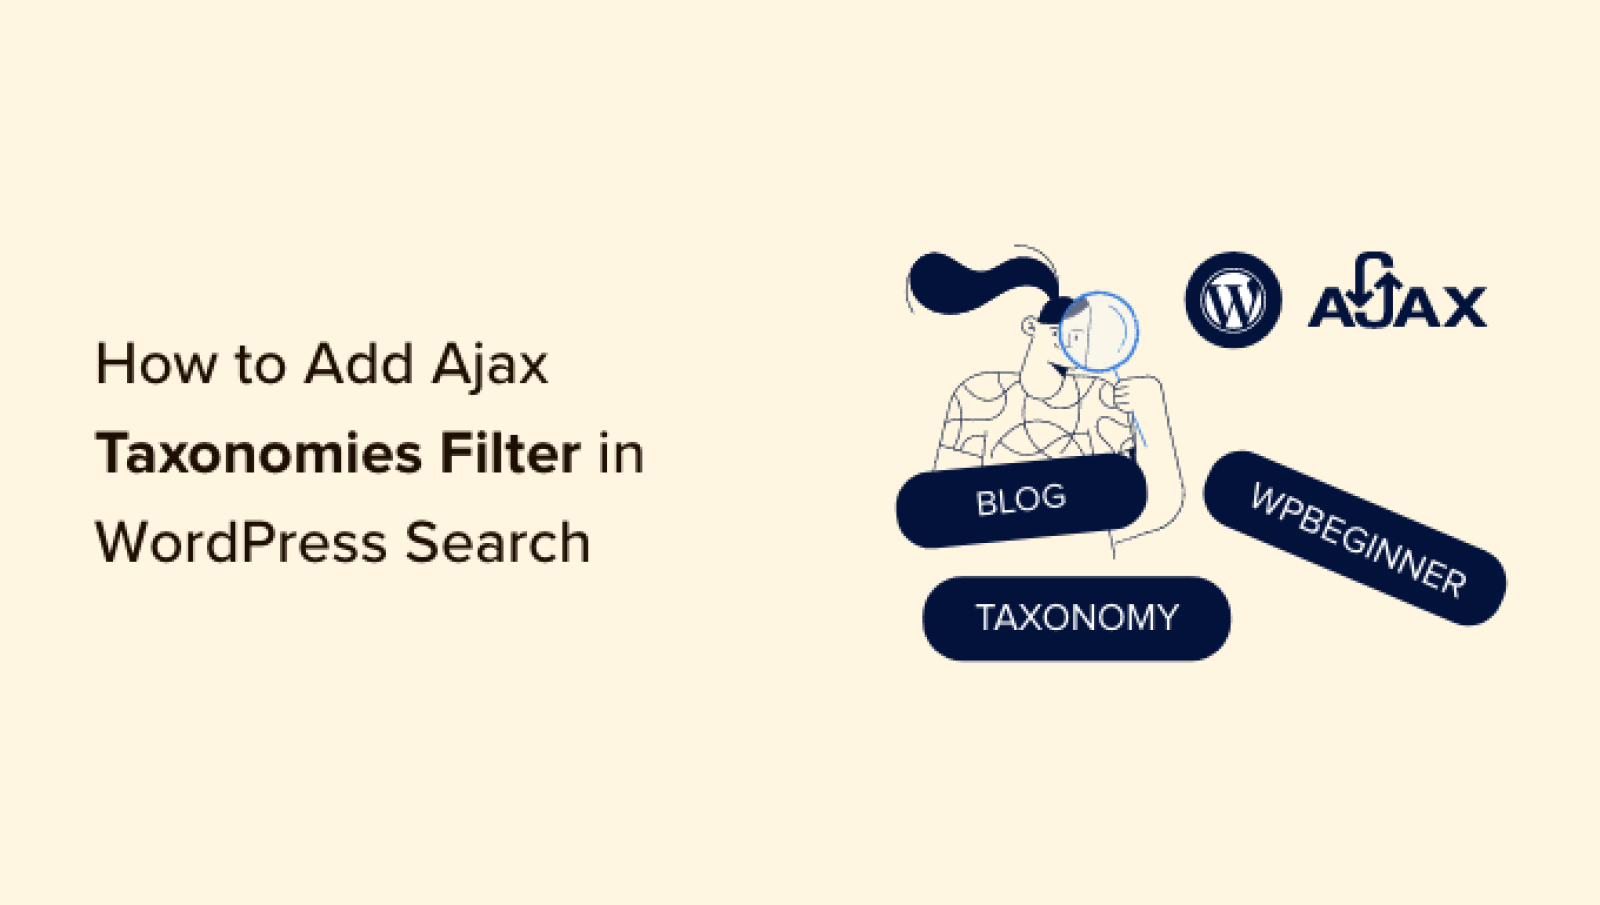 Learn how to Add Ajax Taxonomies Filter in WordPress Search